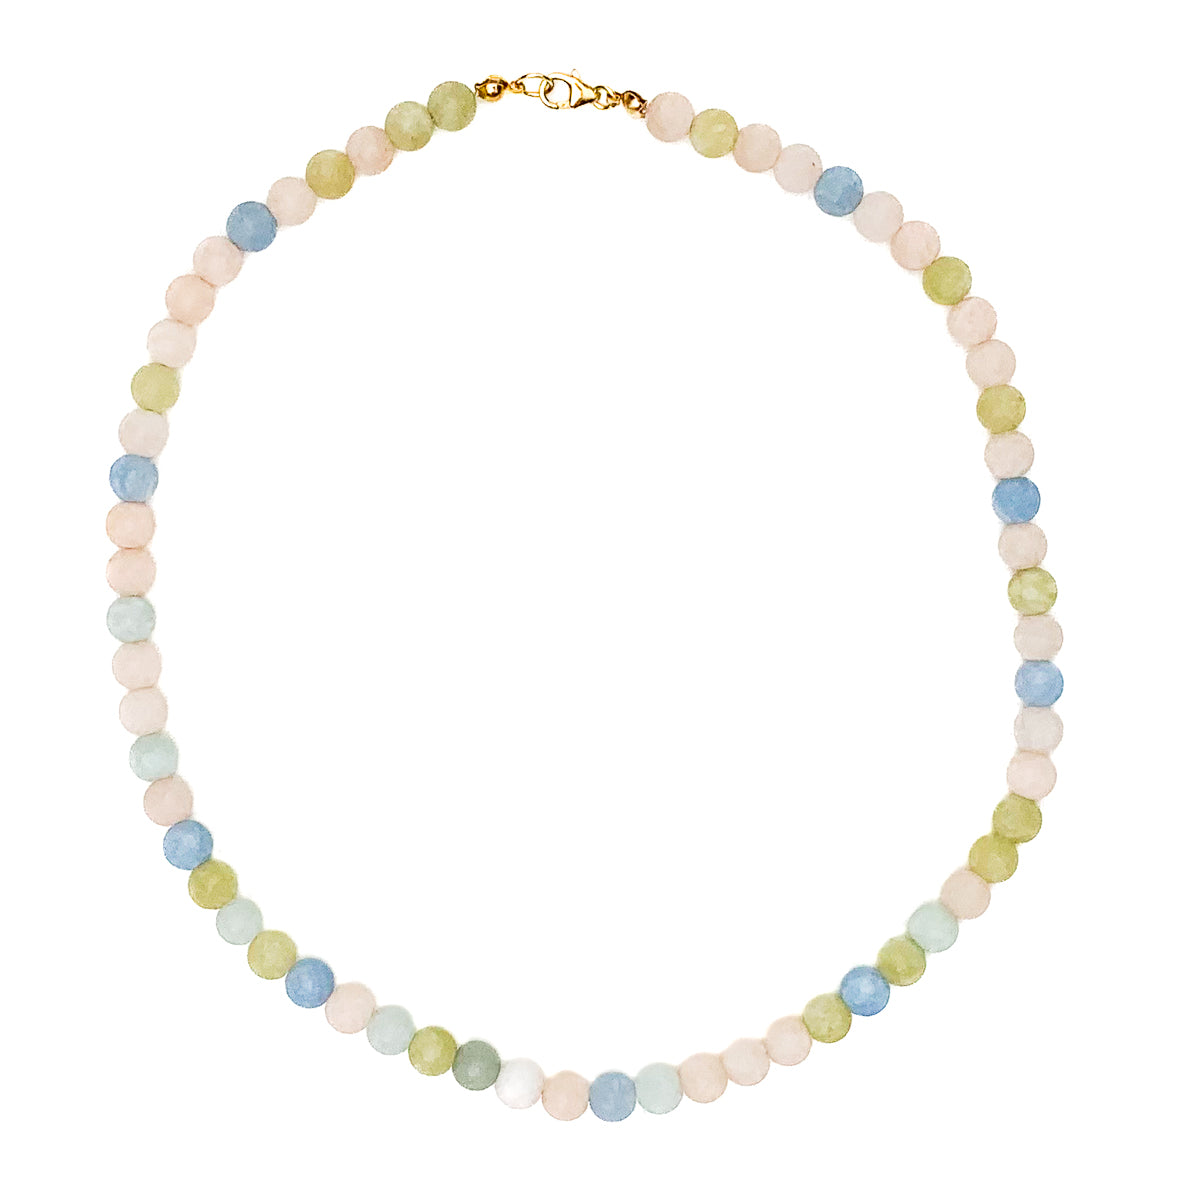 Multicolor Beryl Elastic Bracelet - 6mm Beads